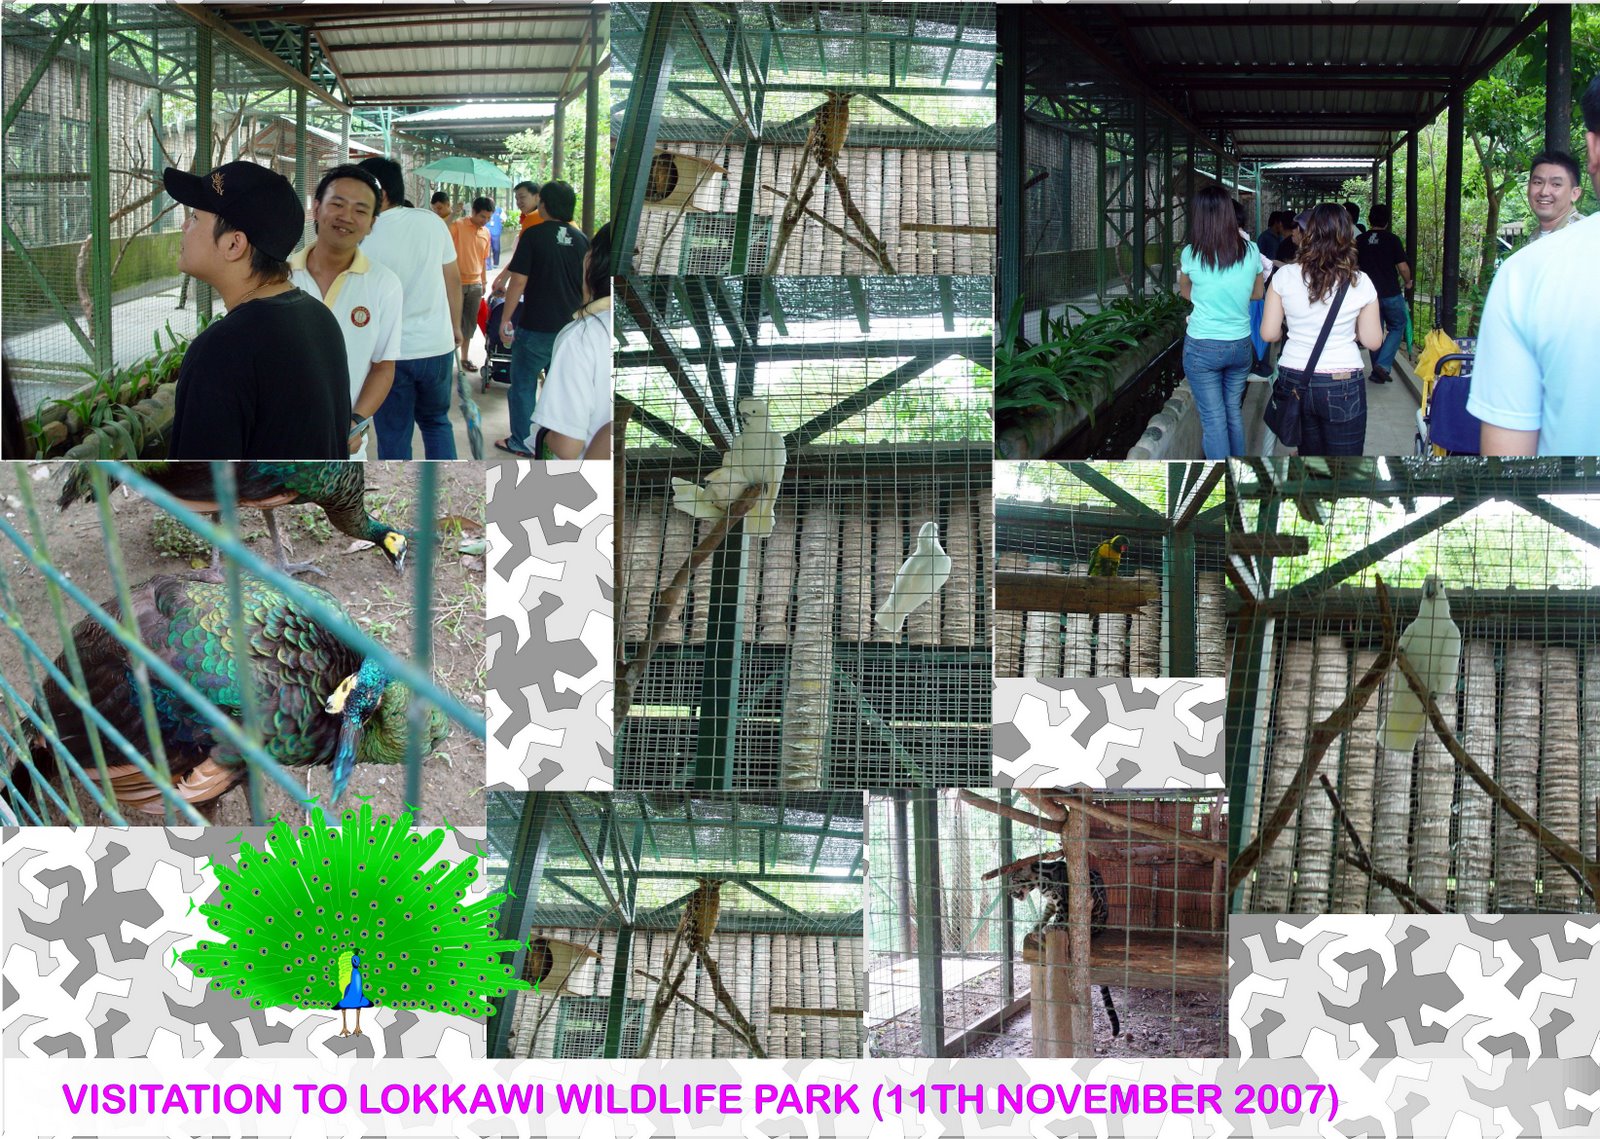 Visitation to Lokkawi Wildlife Park (11th November 2007)